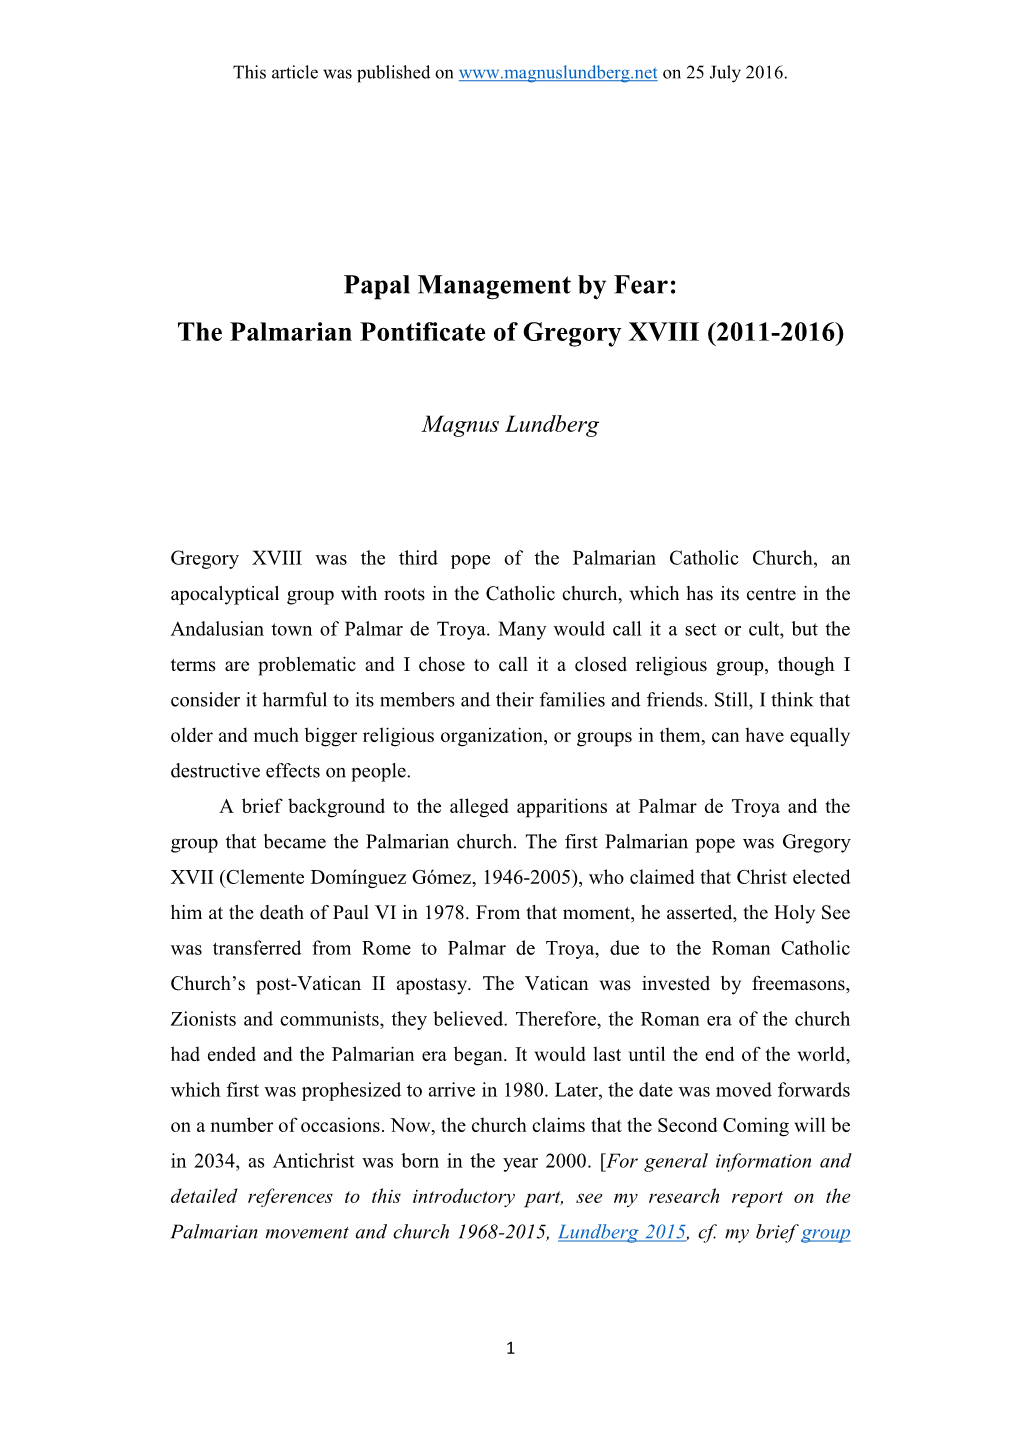 The Palmarian Pontificate of Gregory XVIII (2011-2016)